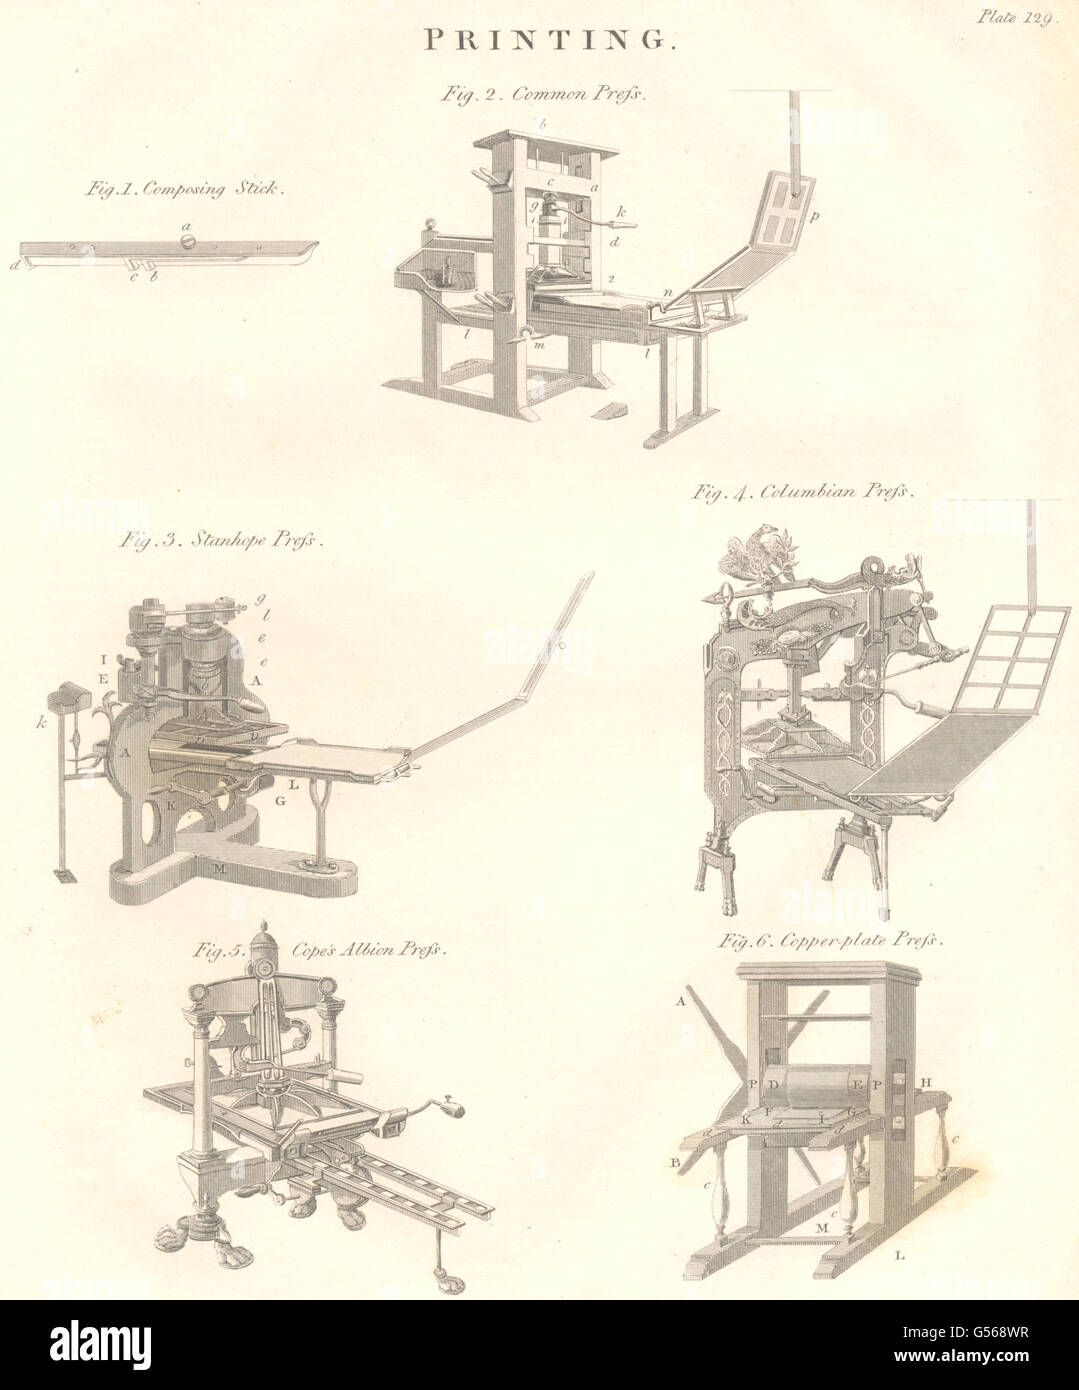 Imprimir:componiendo Stick.Stanhope,Colombinos,Cope Albion,placa de cobre Press, 1830 Foto de stock